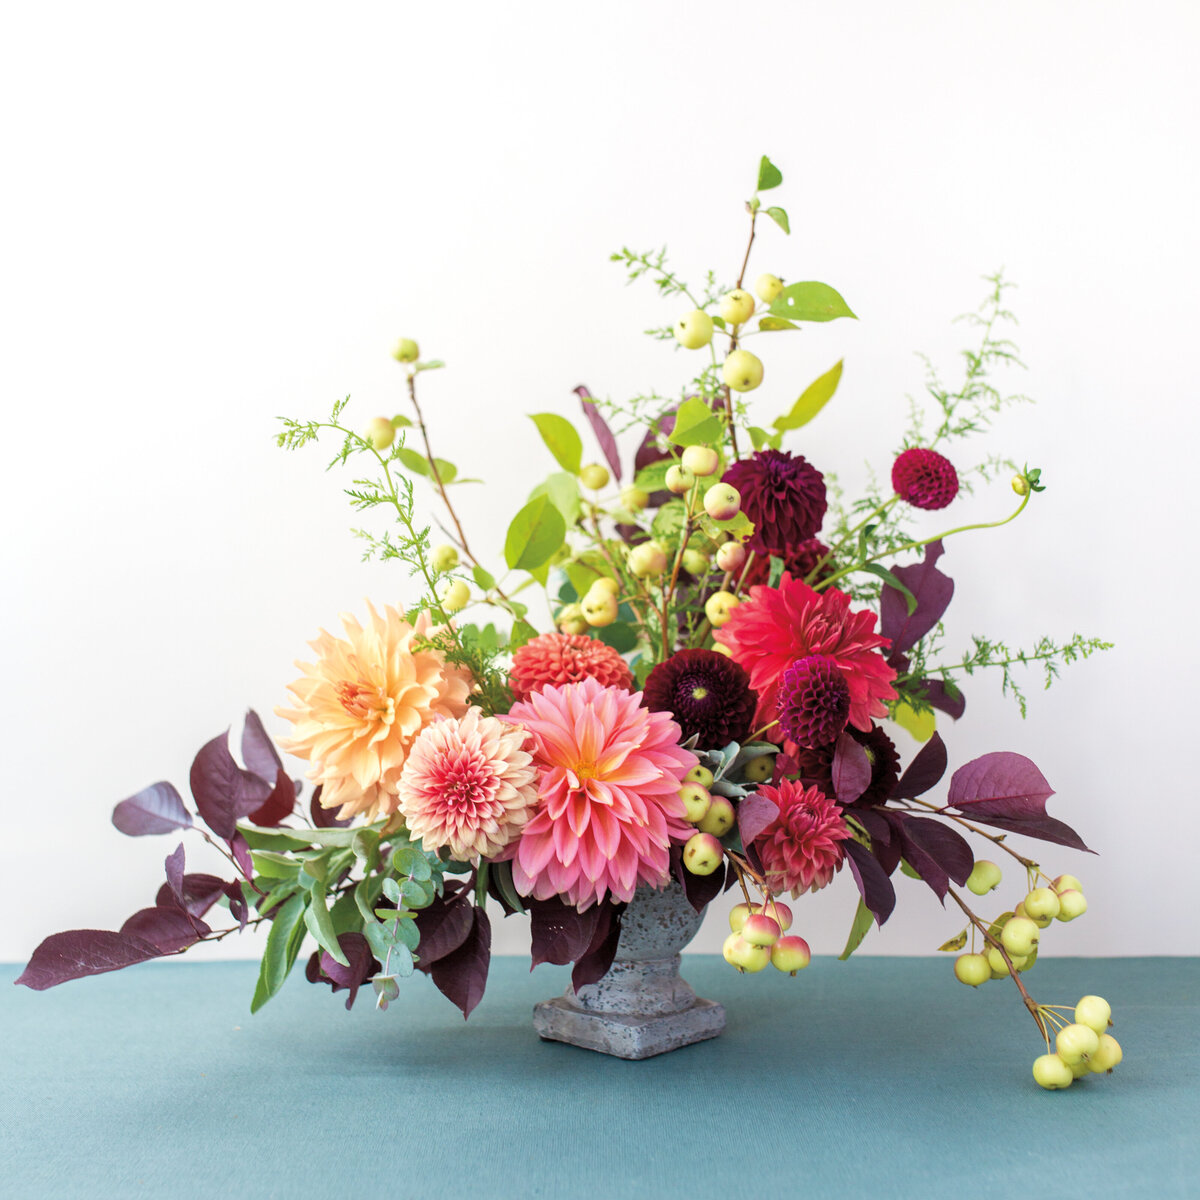 Atelier-Carmel-Wedding-Florist-GALLERY-Arrangements-20